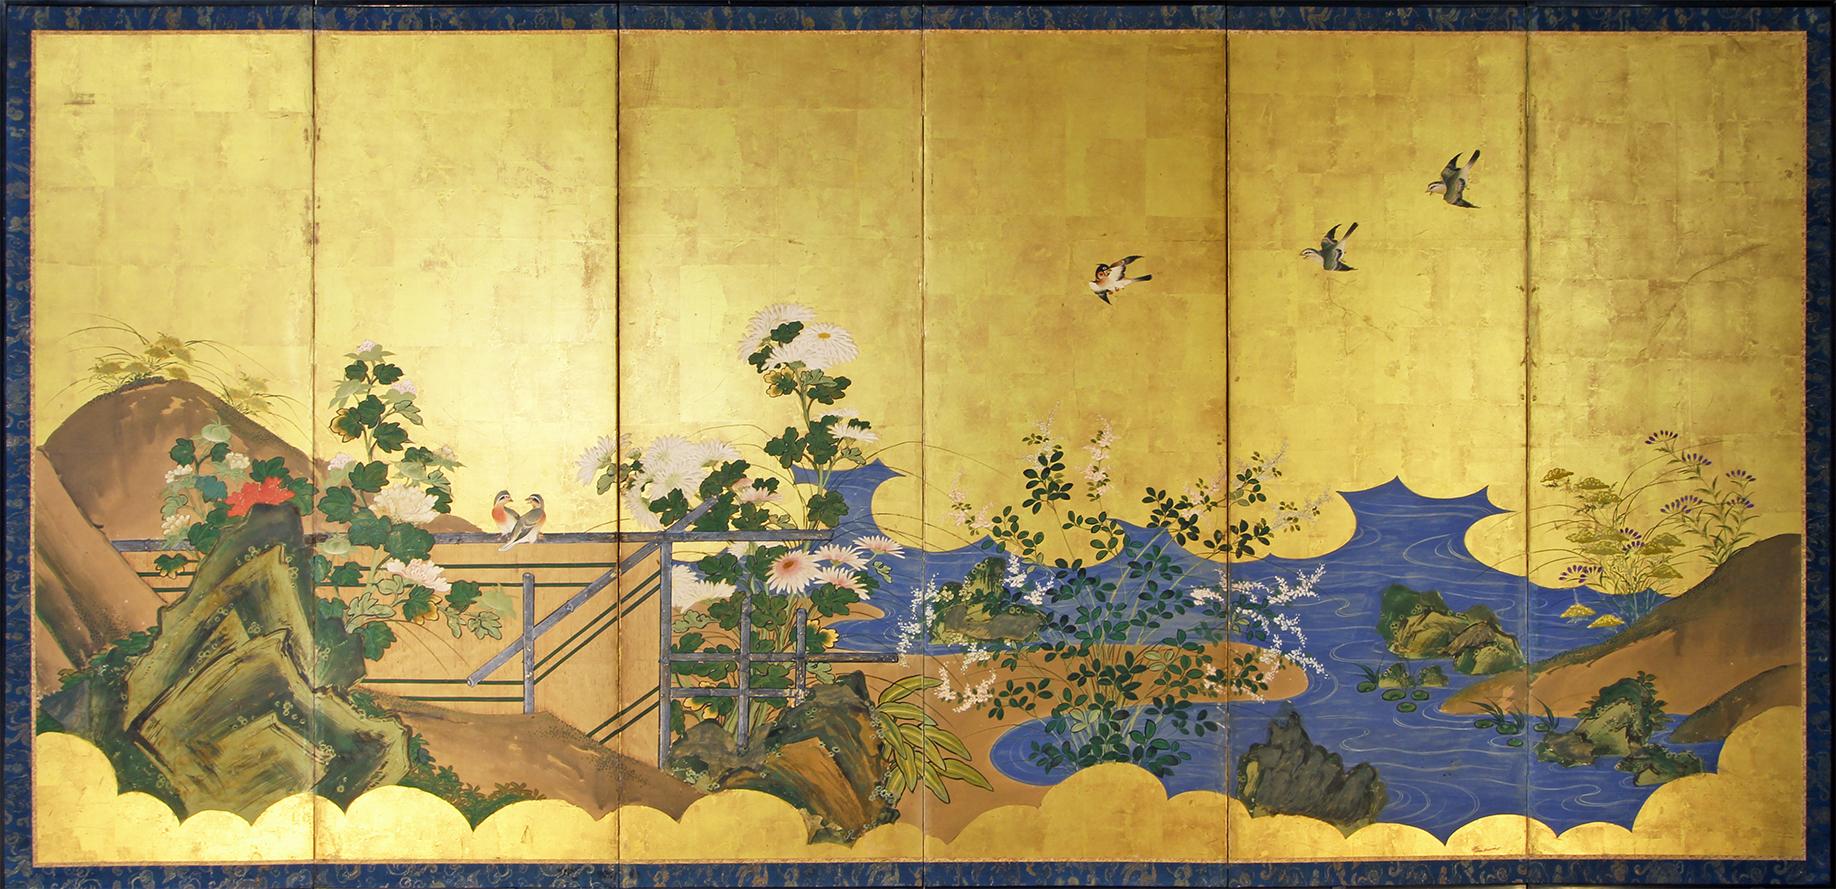 Gold Leaf Edo Period, Early 19th Century Japanese Folding Screen by Rinpa School